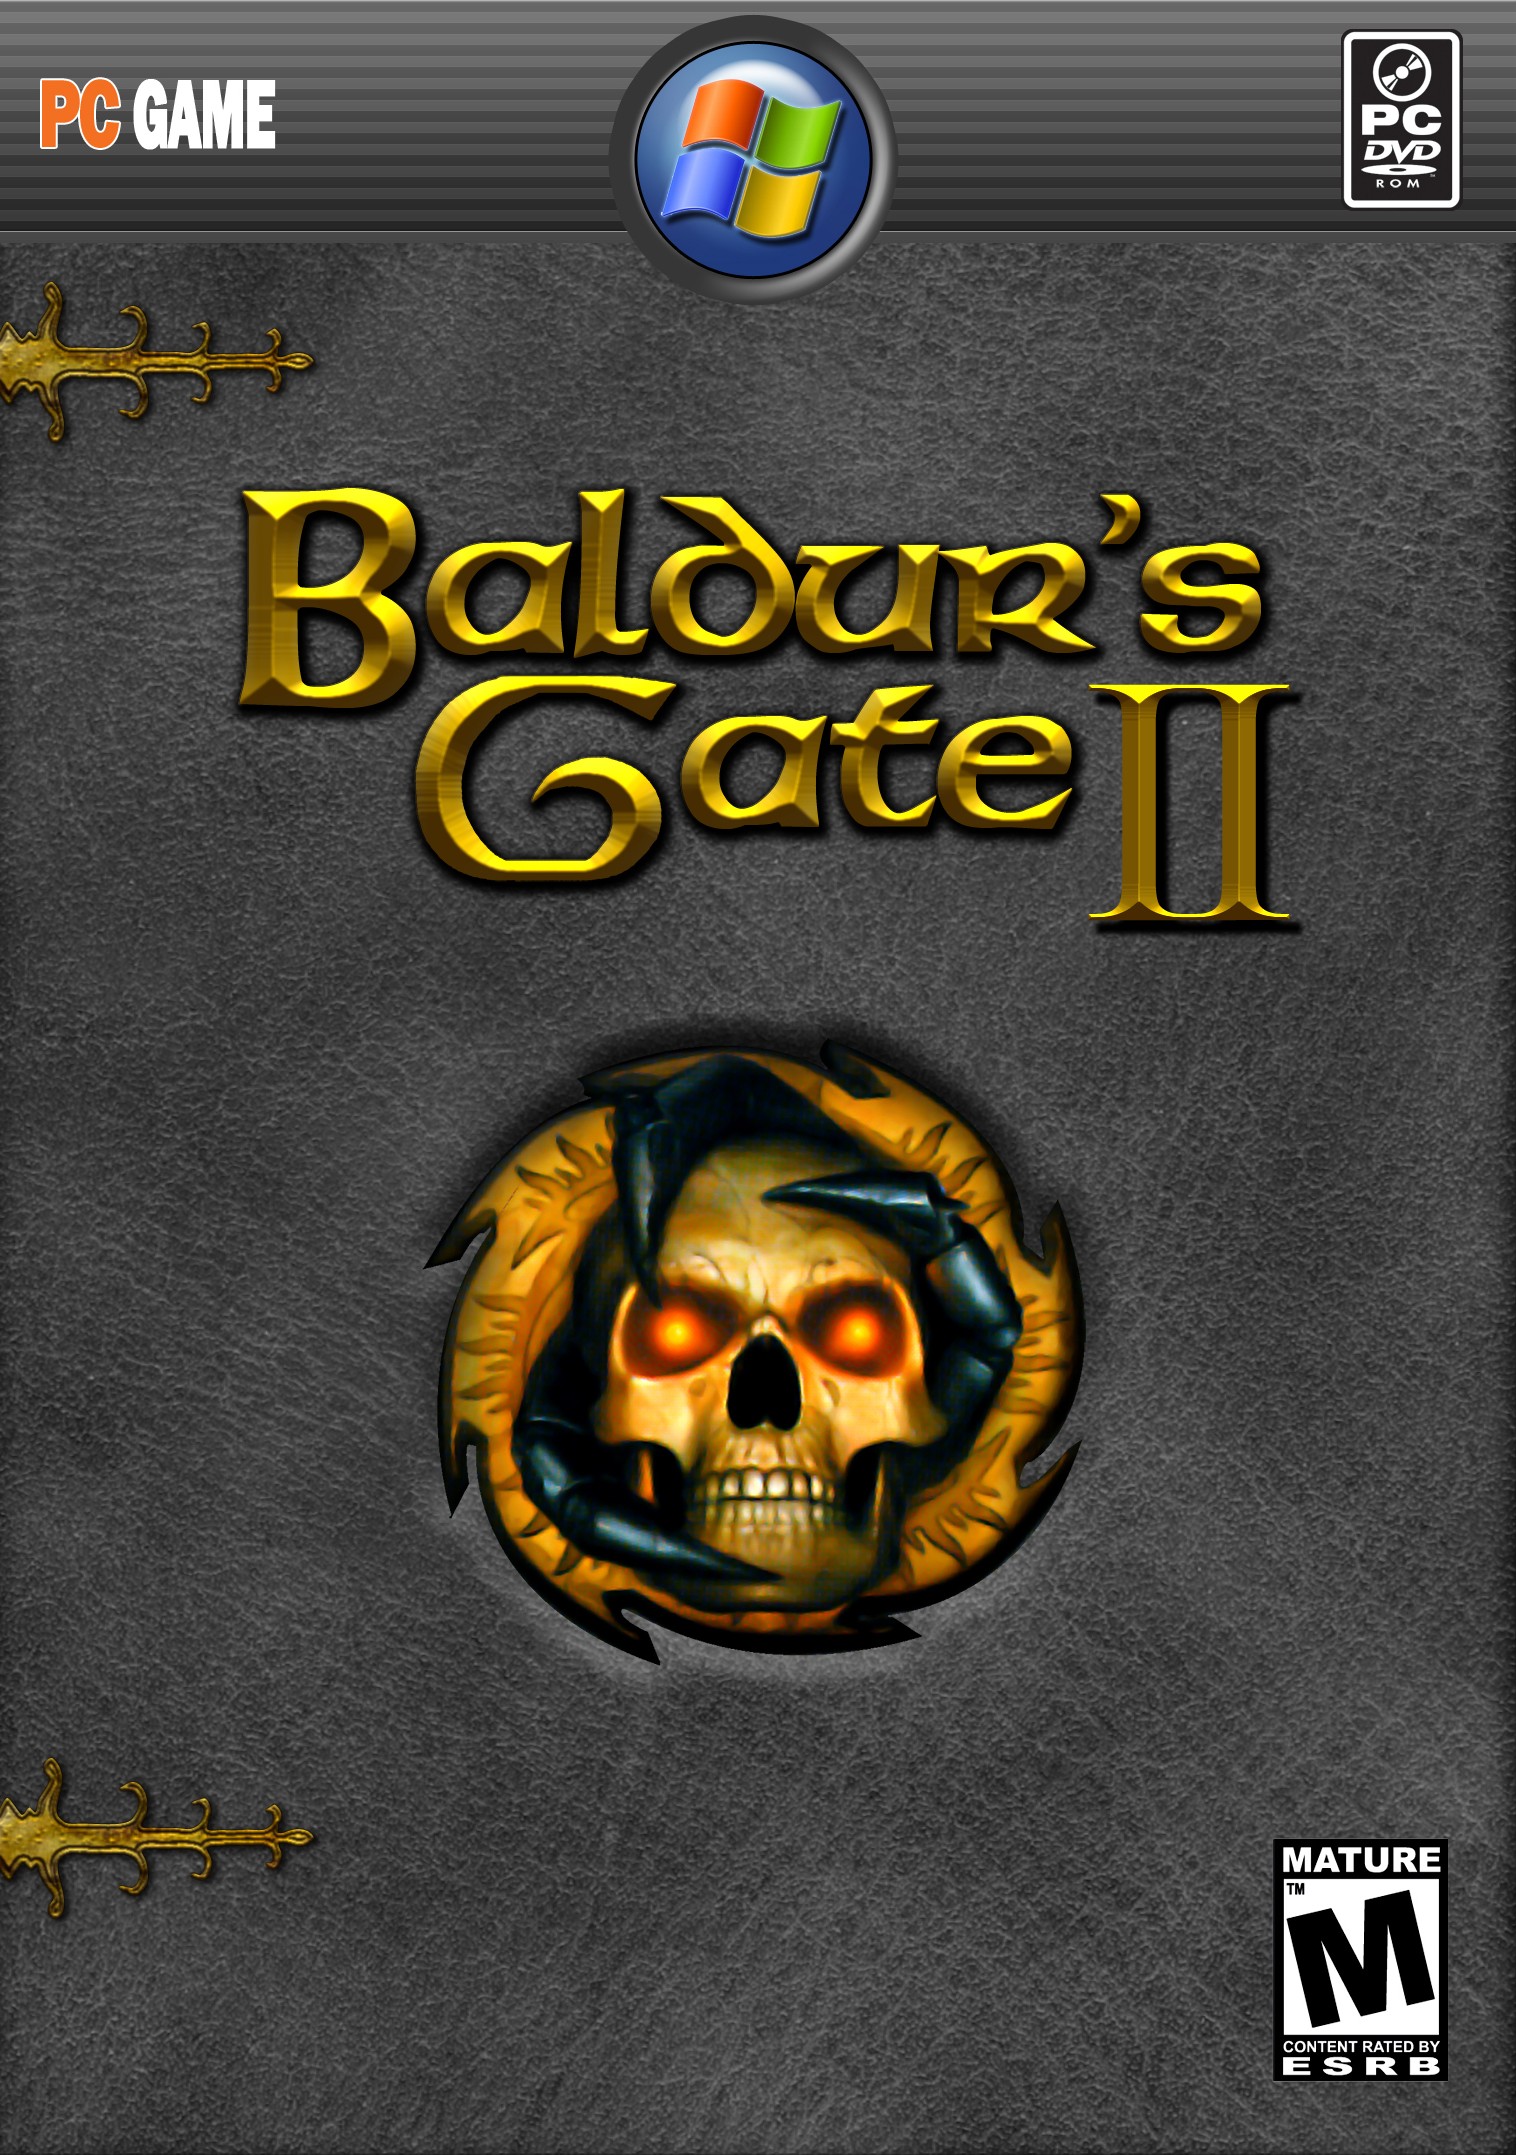 'Baldur's Gate 2'